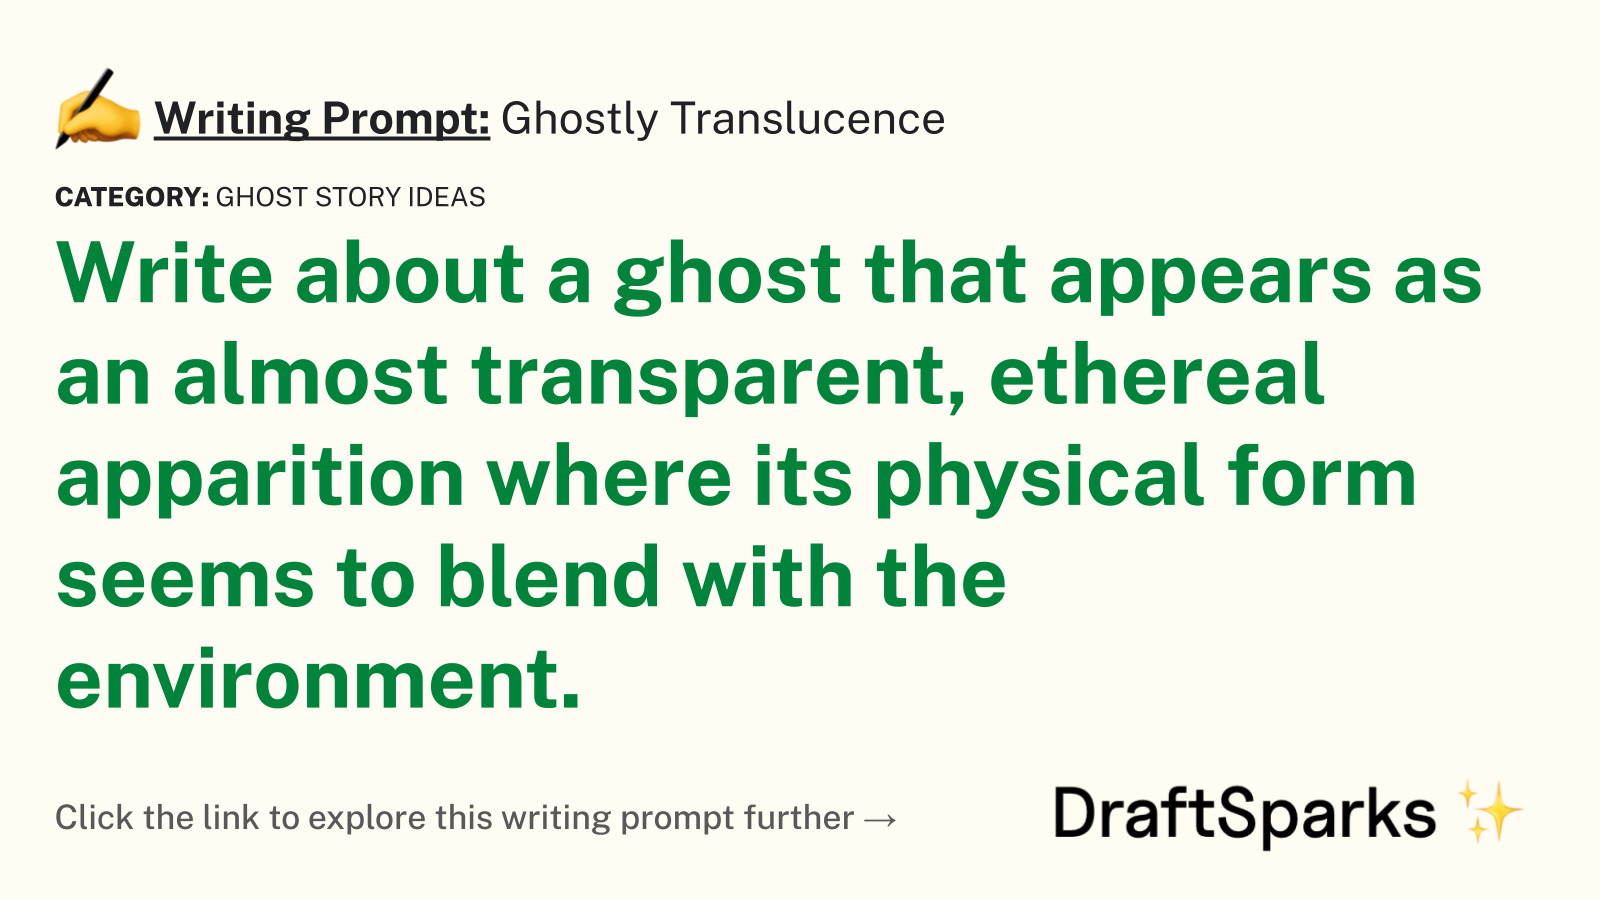 Ghostly Translucence